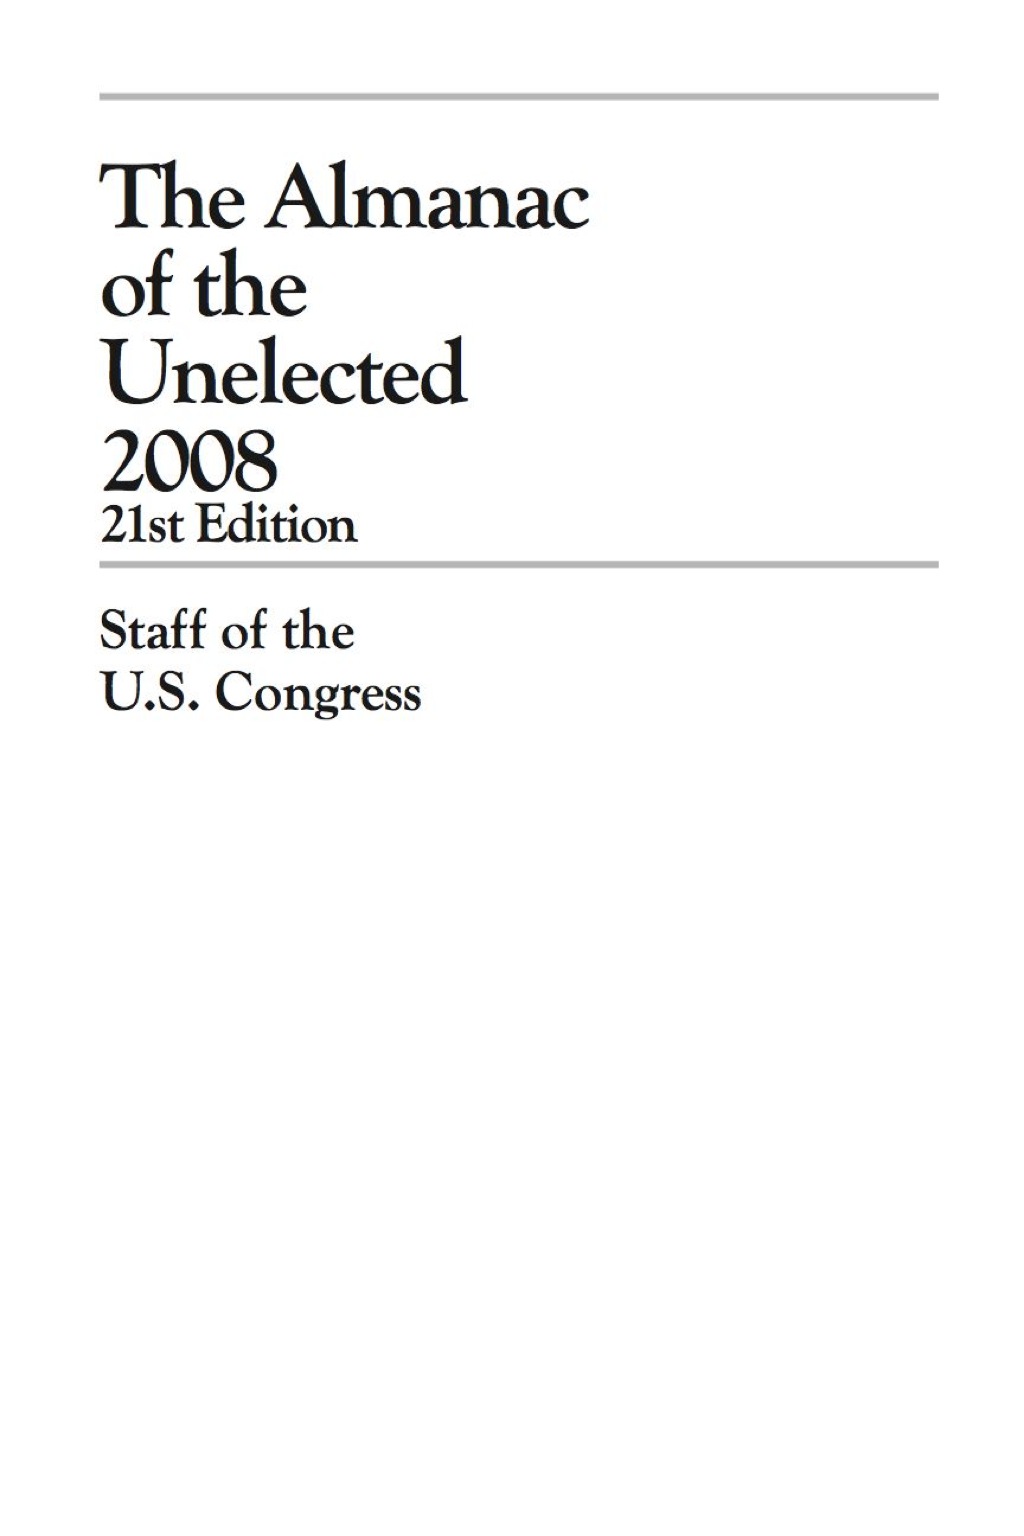 The Almanac of the Unelected (eBook) - Lisa Friedman